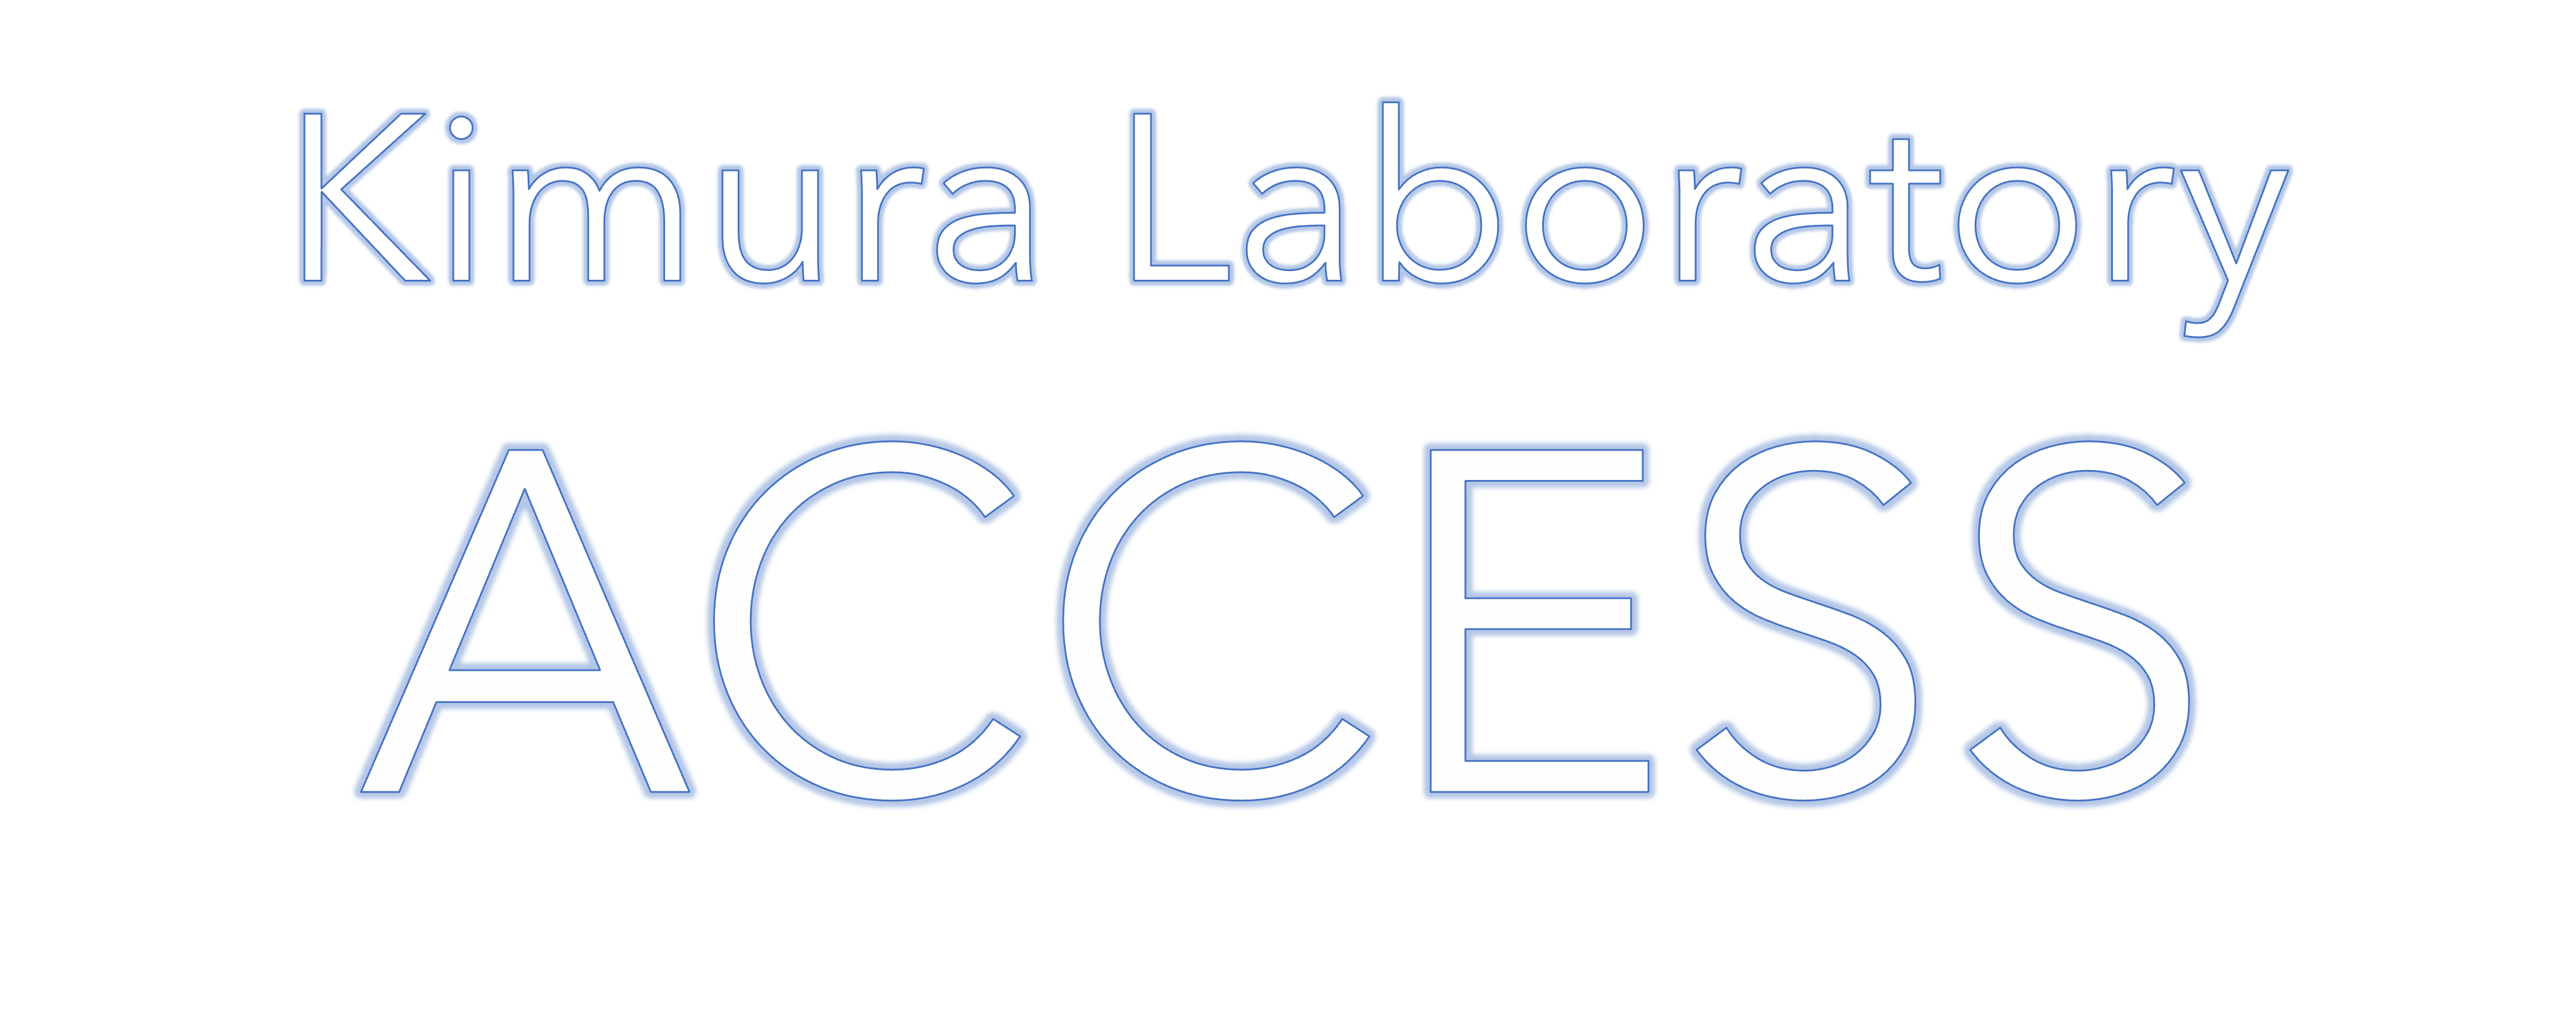 Kimura laboratory